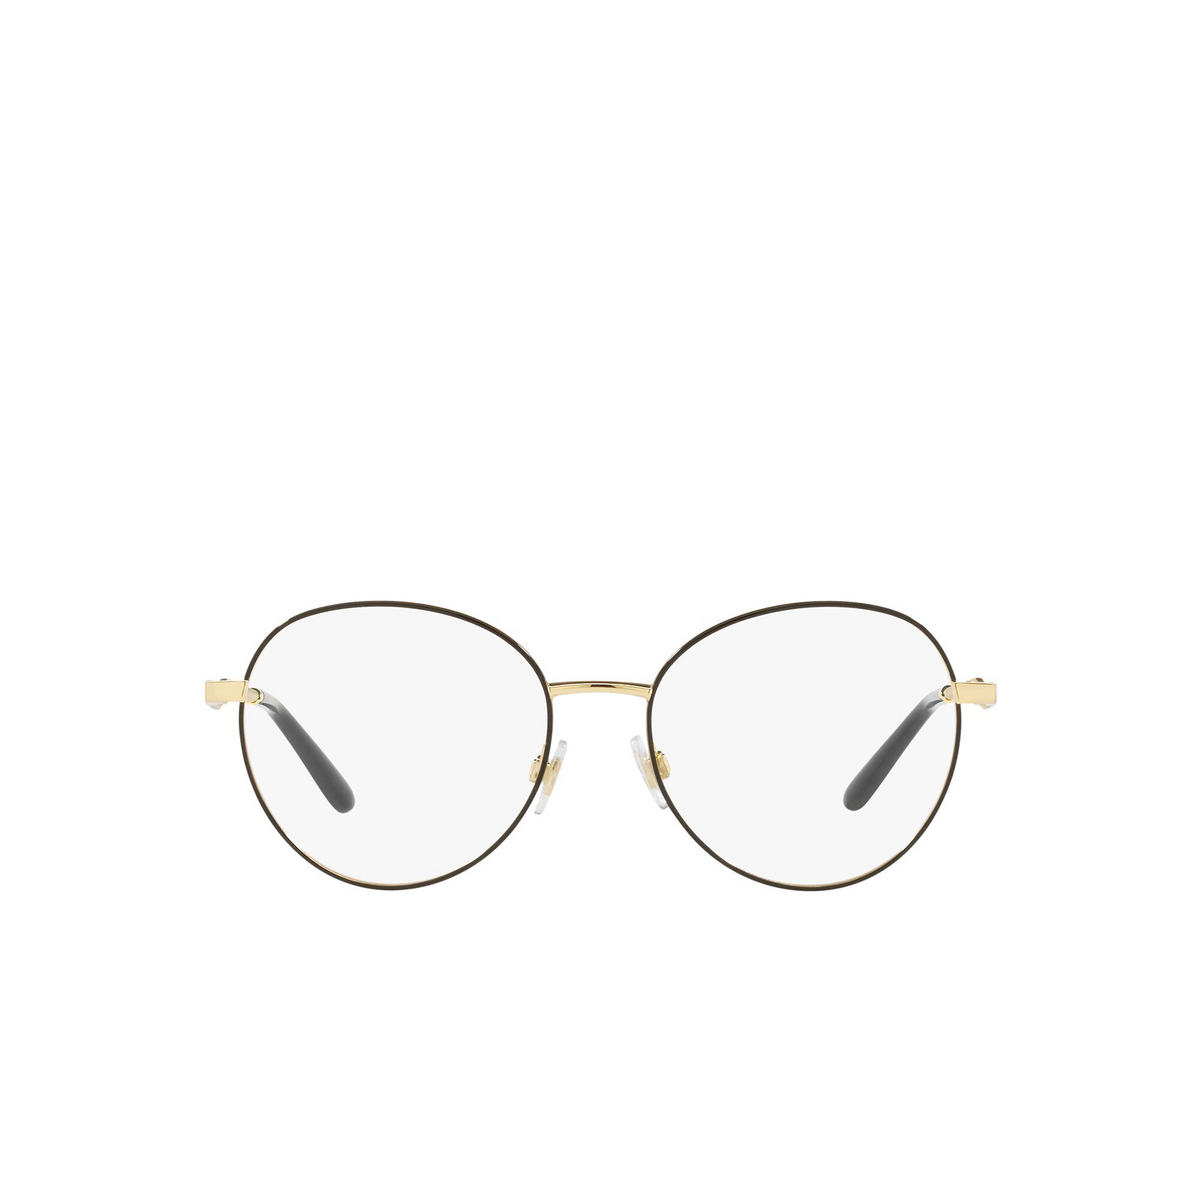 Dolce & Gabbana® Round Eyeglasses: DG1333 color Gold / Black 1334 - front view.